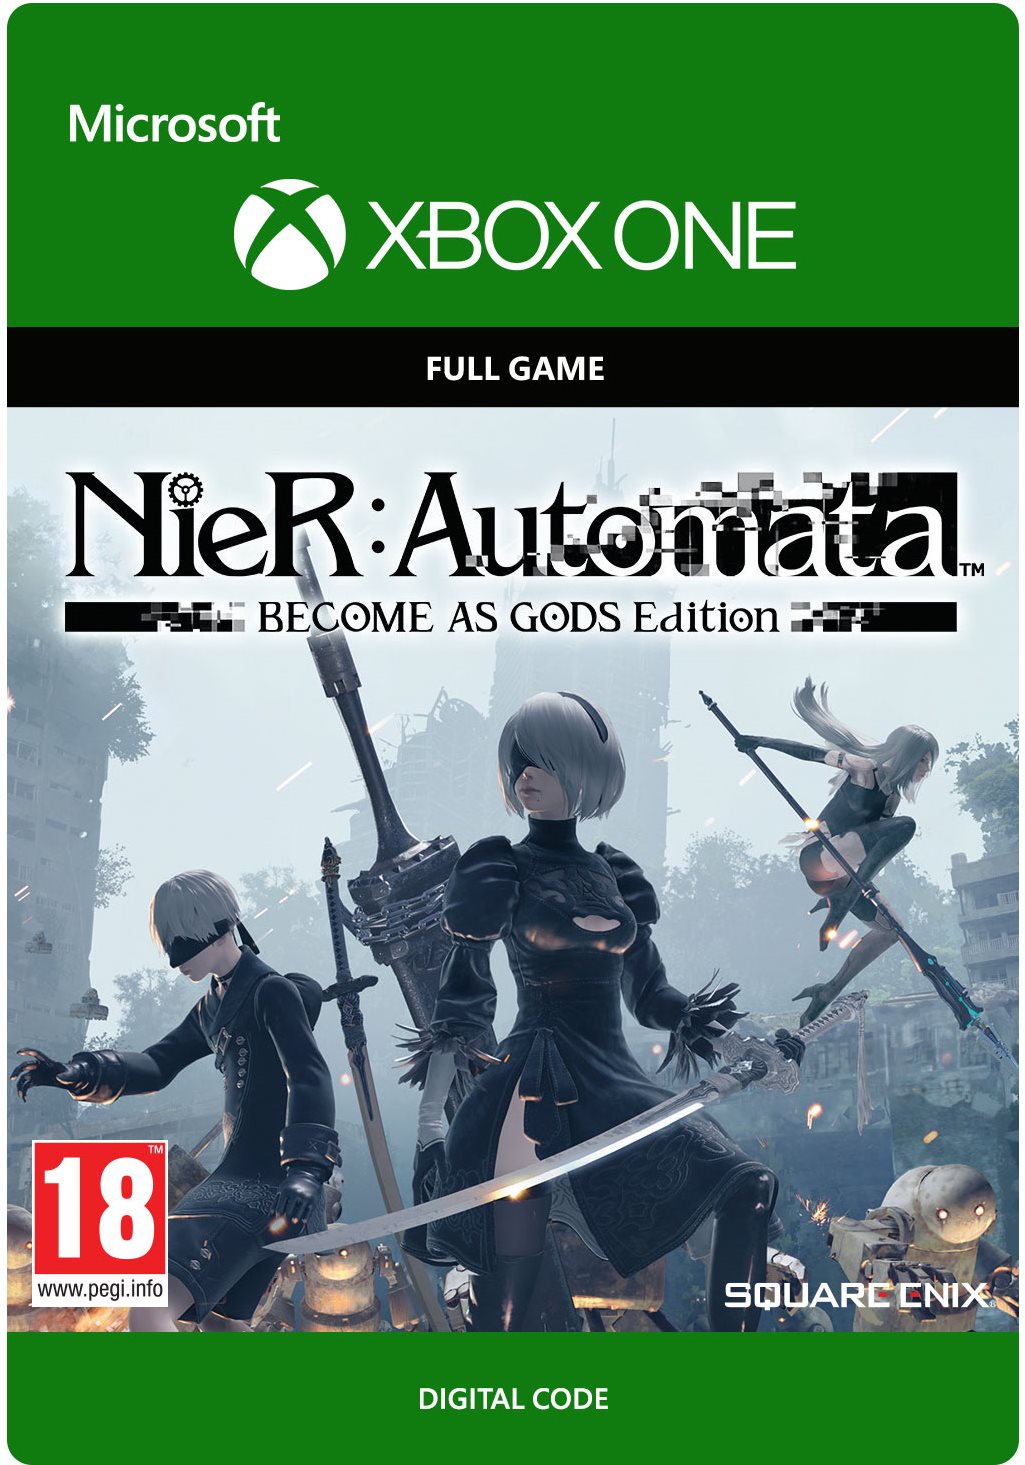 NieR:Automata BECOME AS GODS Edition - Xbox DIGITAL